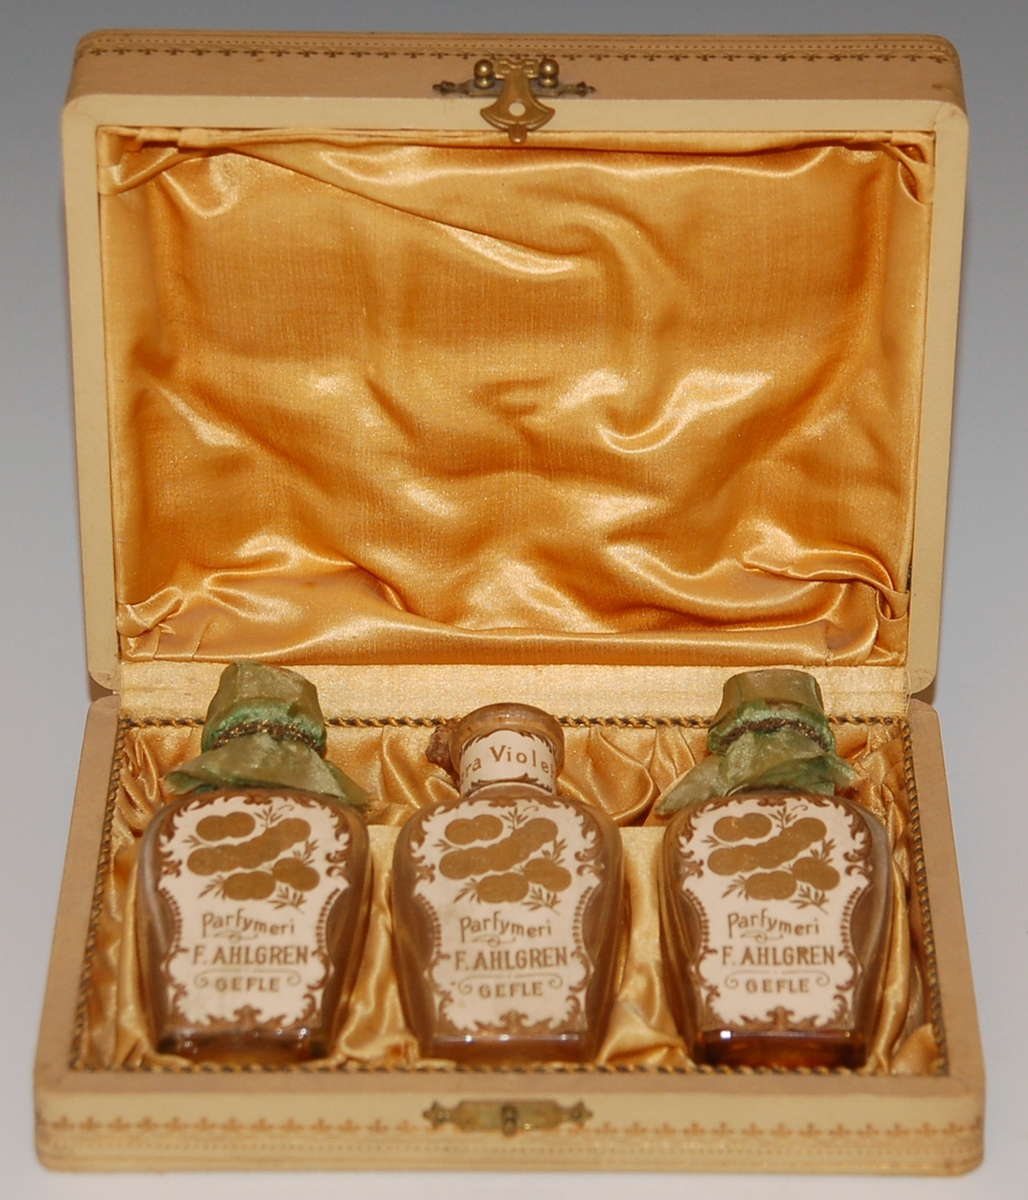 Etui med tre parfymflaskor.
På locket text i guld:
"Parfymeriet 
F. Ahlgren
Gefle"